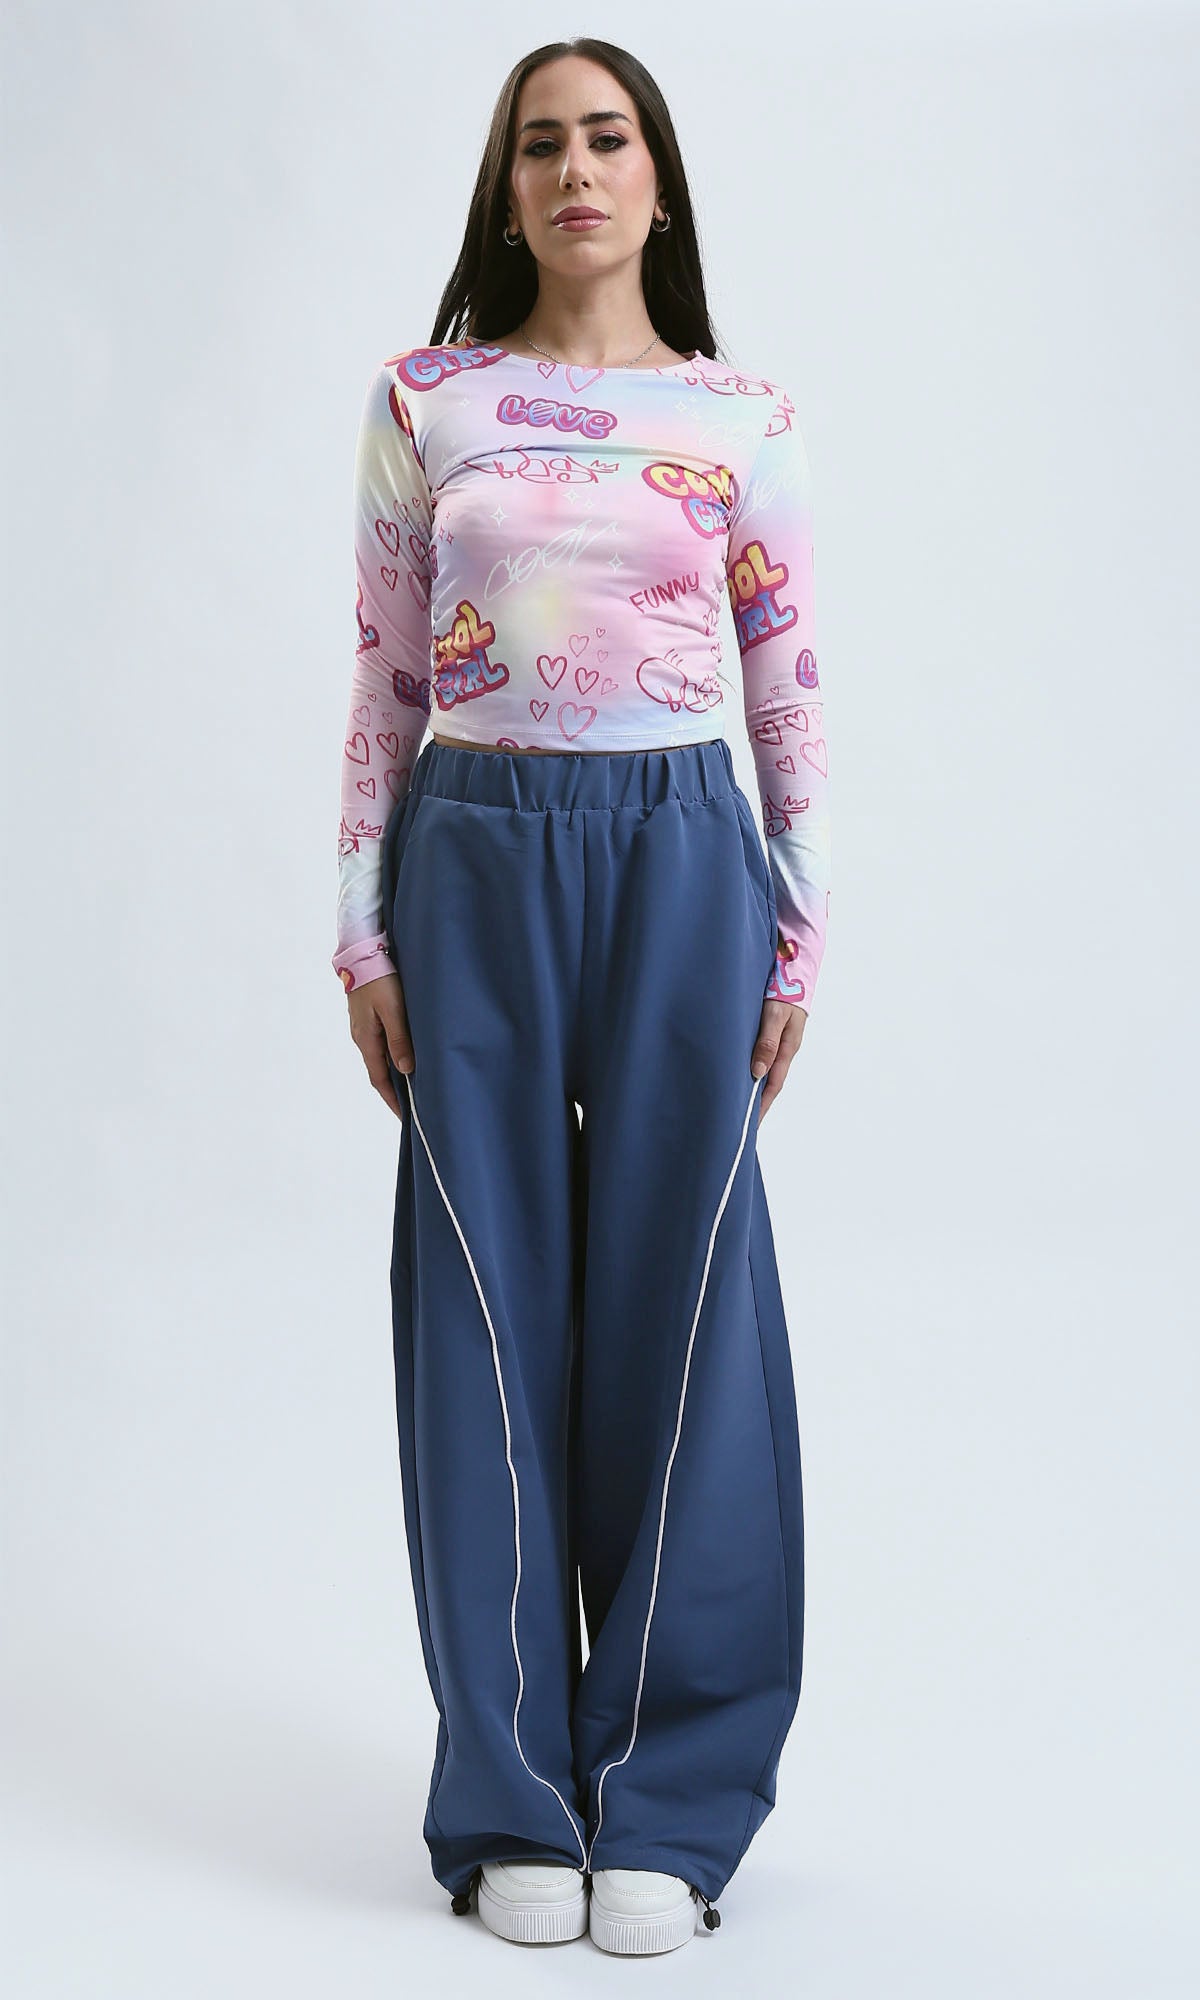 O187835 Multicolour "Cool Girl" Long Sleeves Fashionable Top